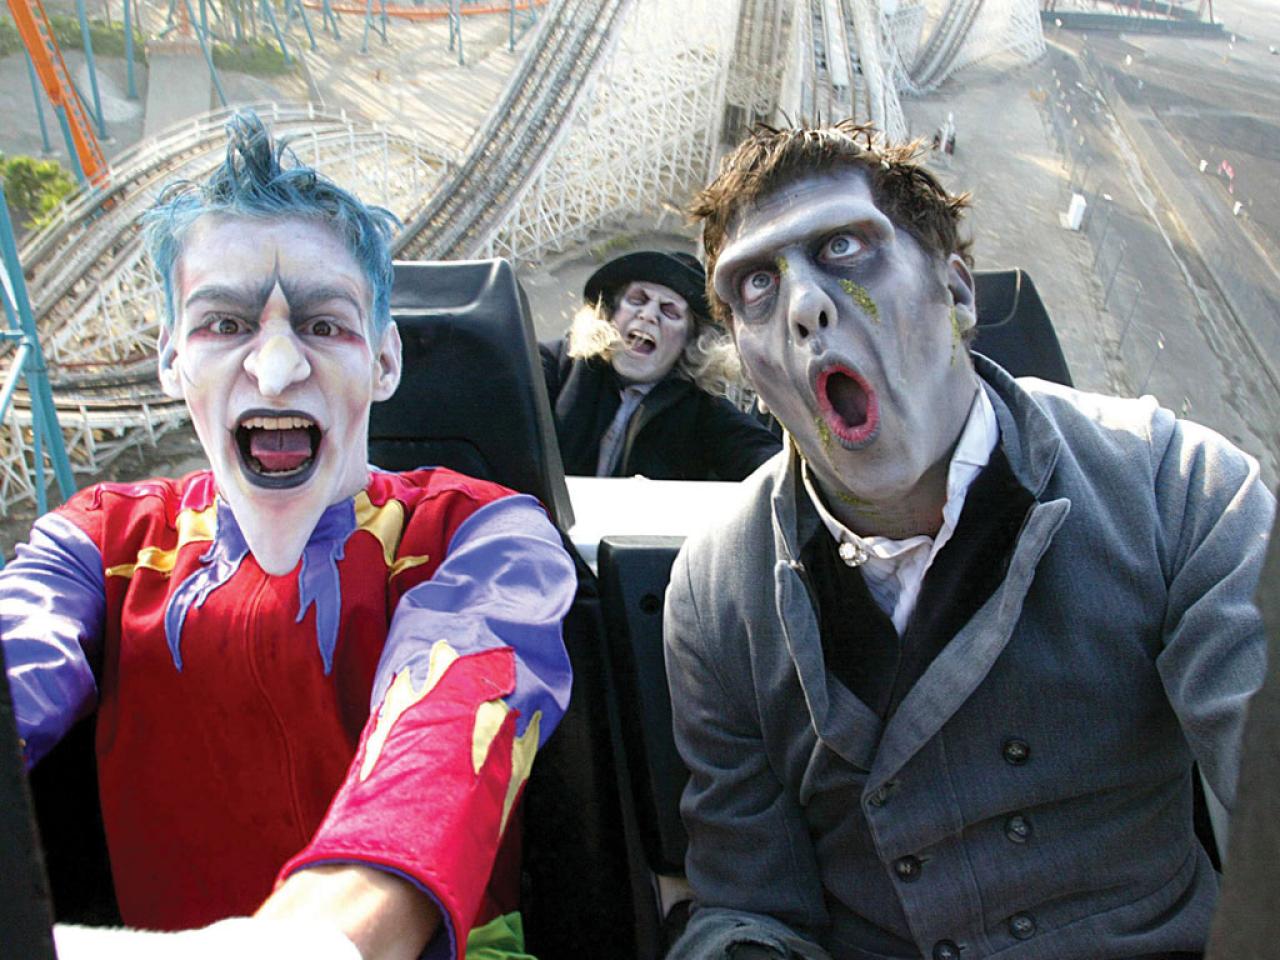 Amusement Parks Go Haunted for Halloween